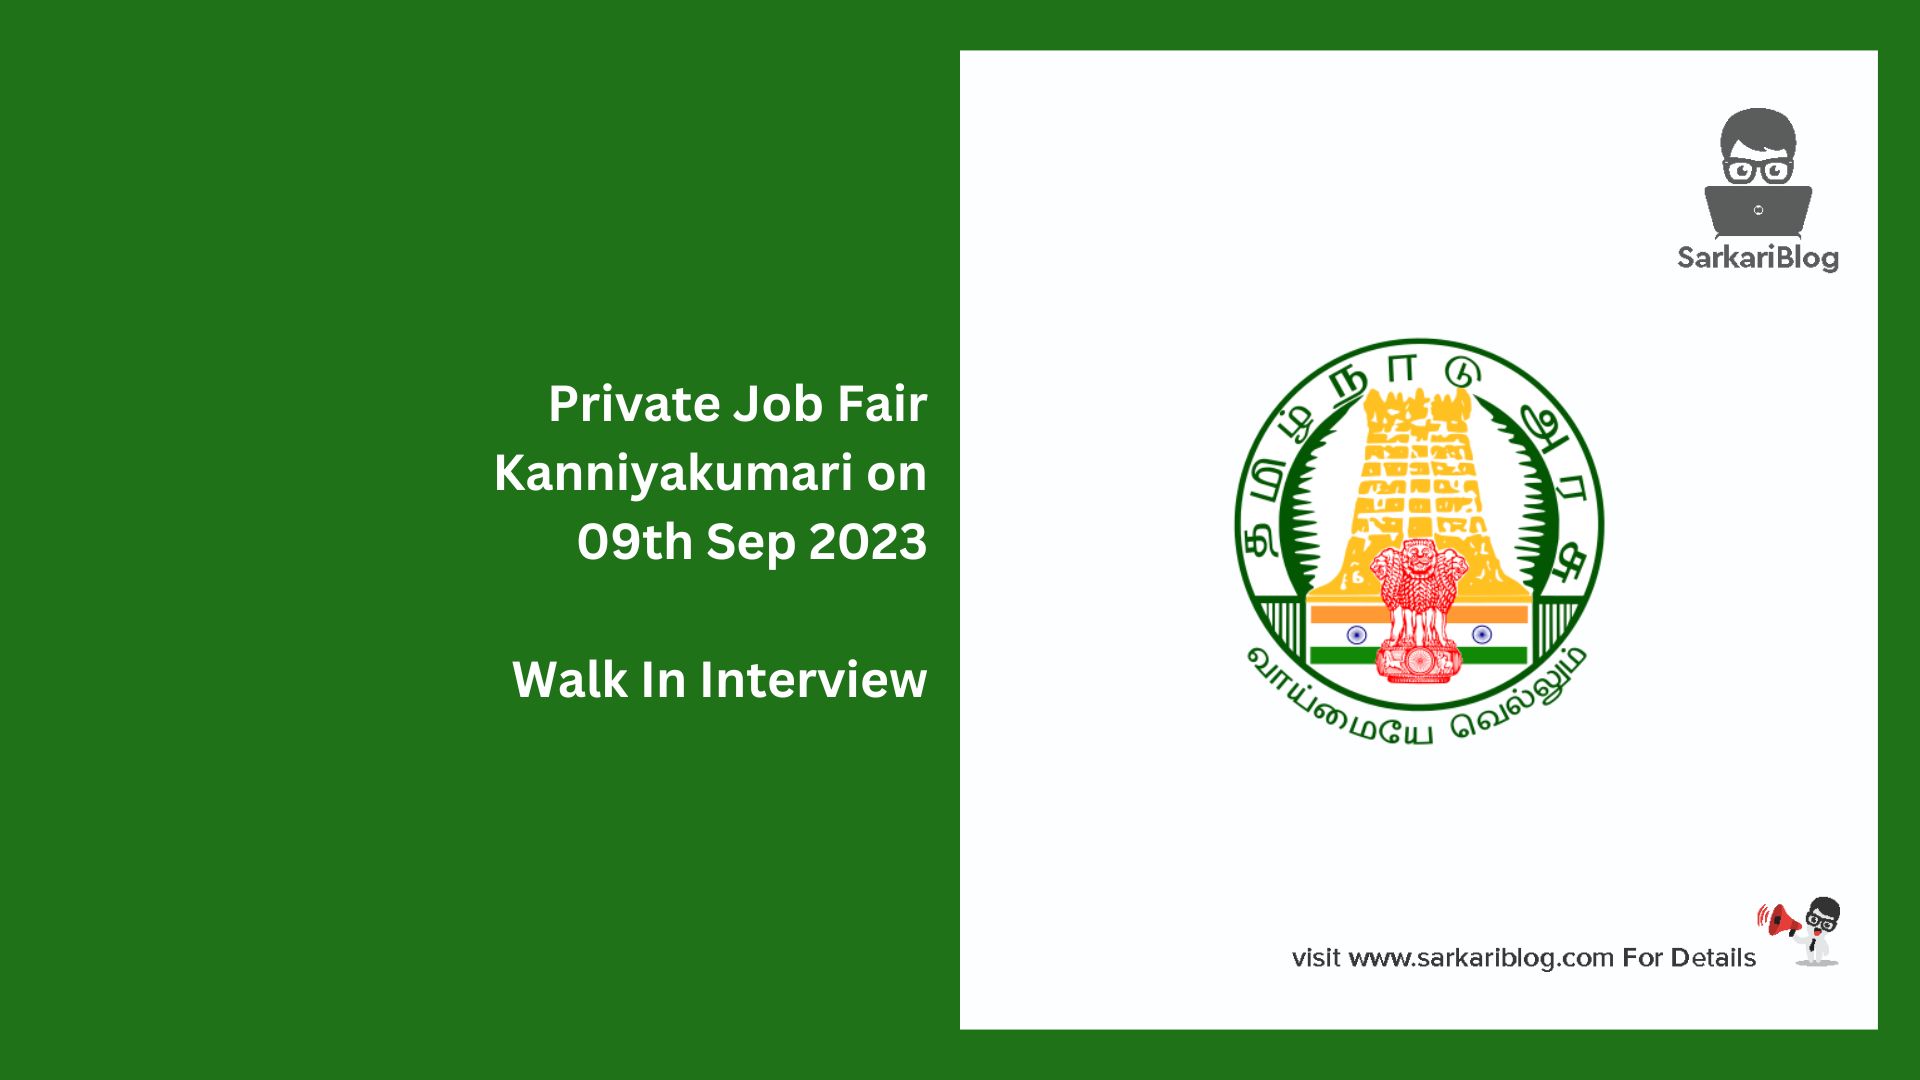 Private Job Fair Kanniyakumari on 09th Sep 2023